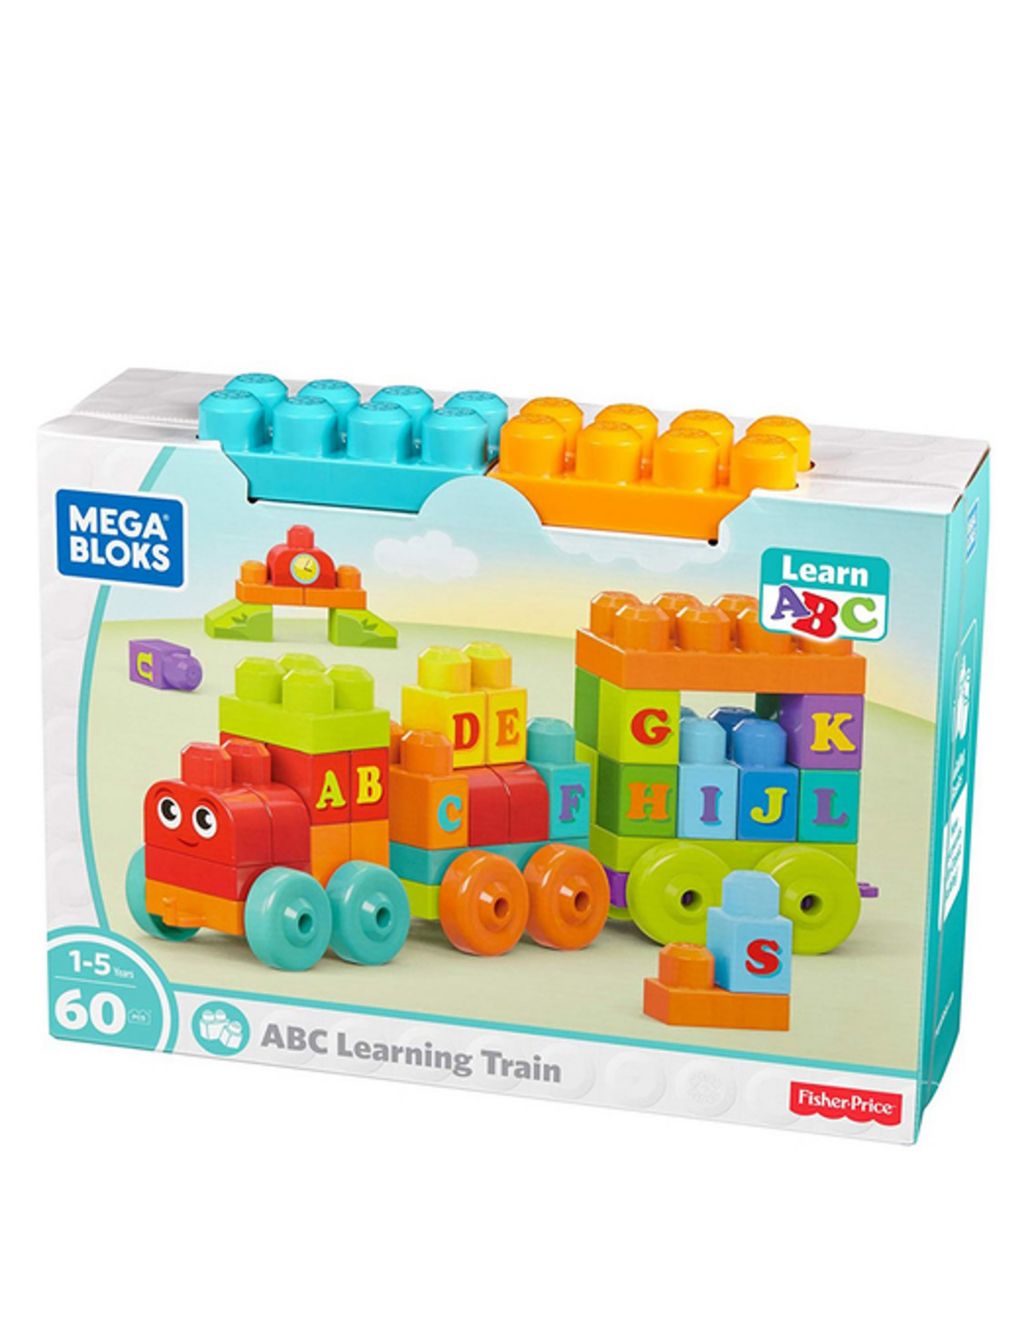 Alphabet Train Toy (1-5 Yrs) image 1